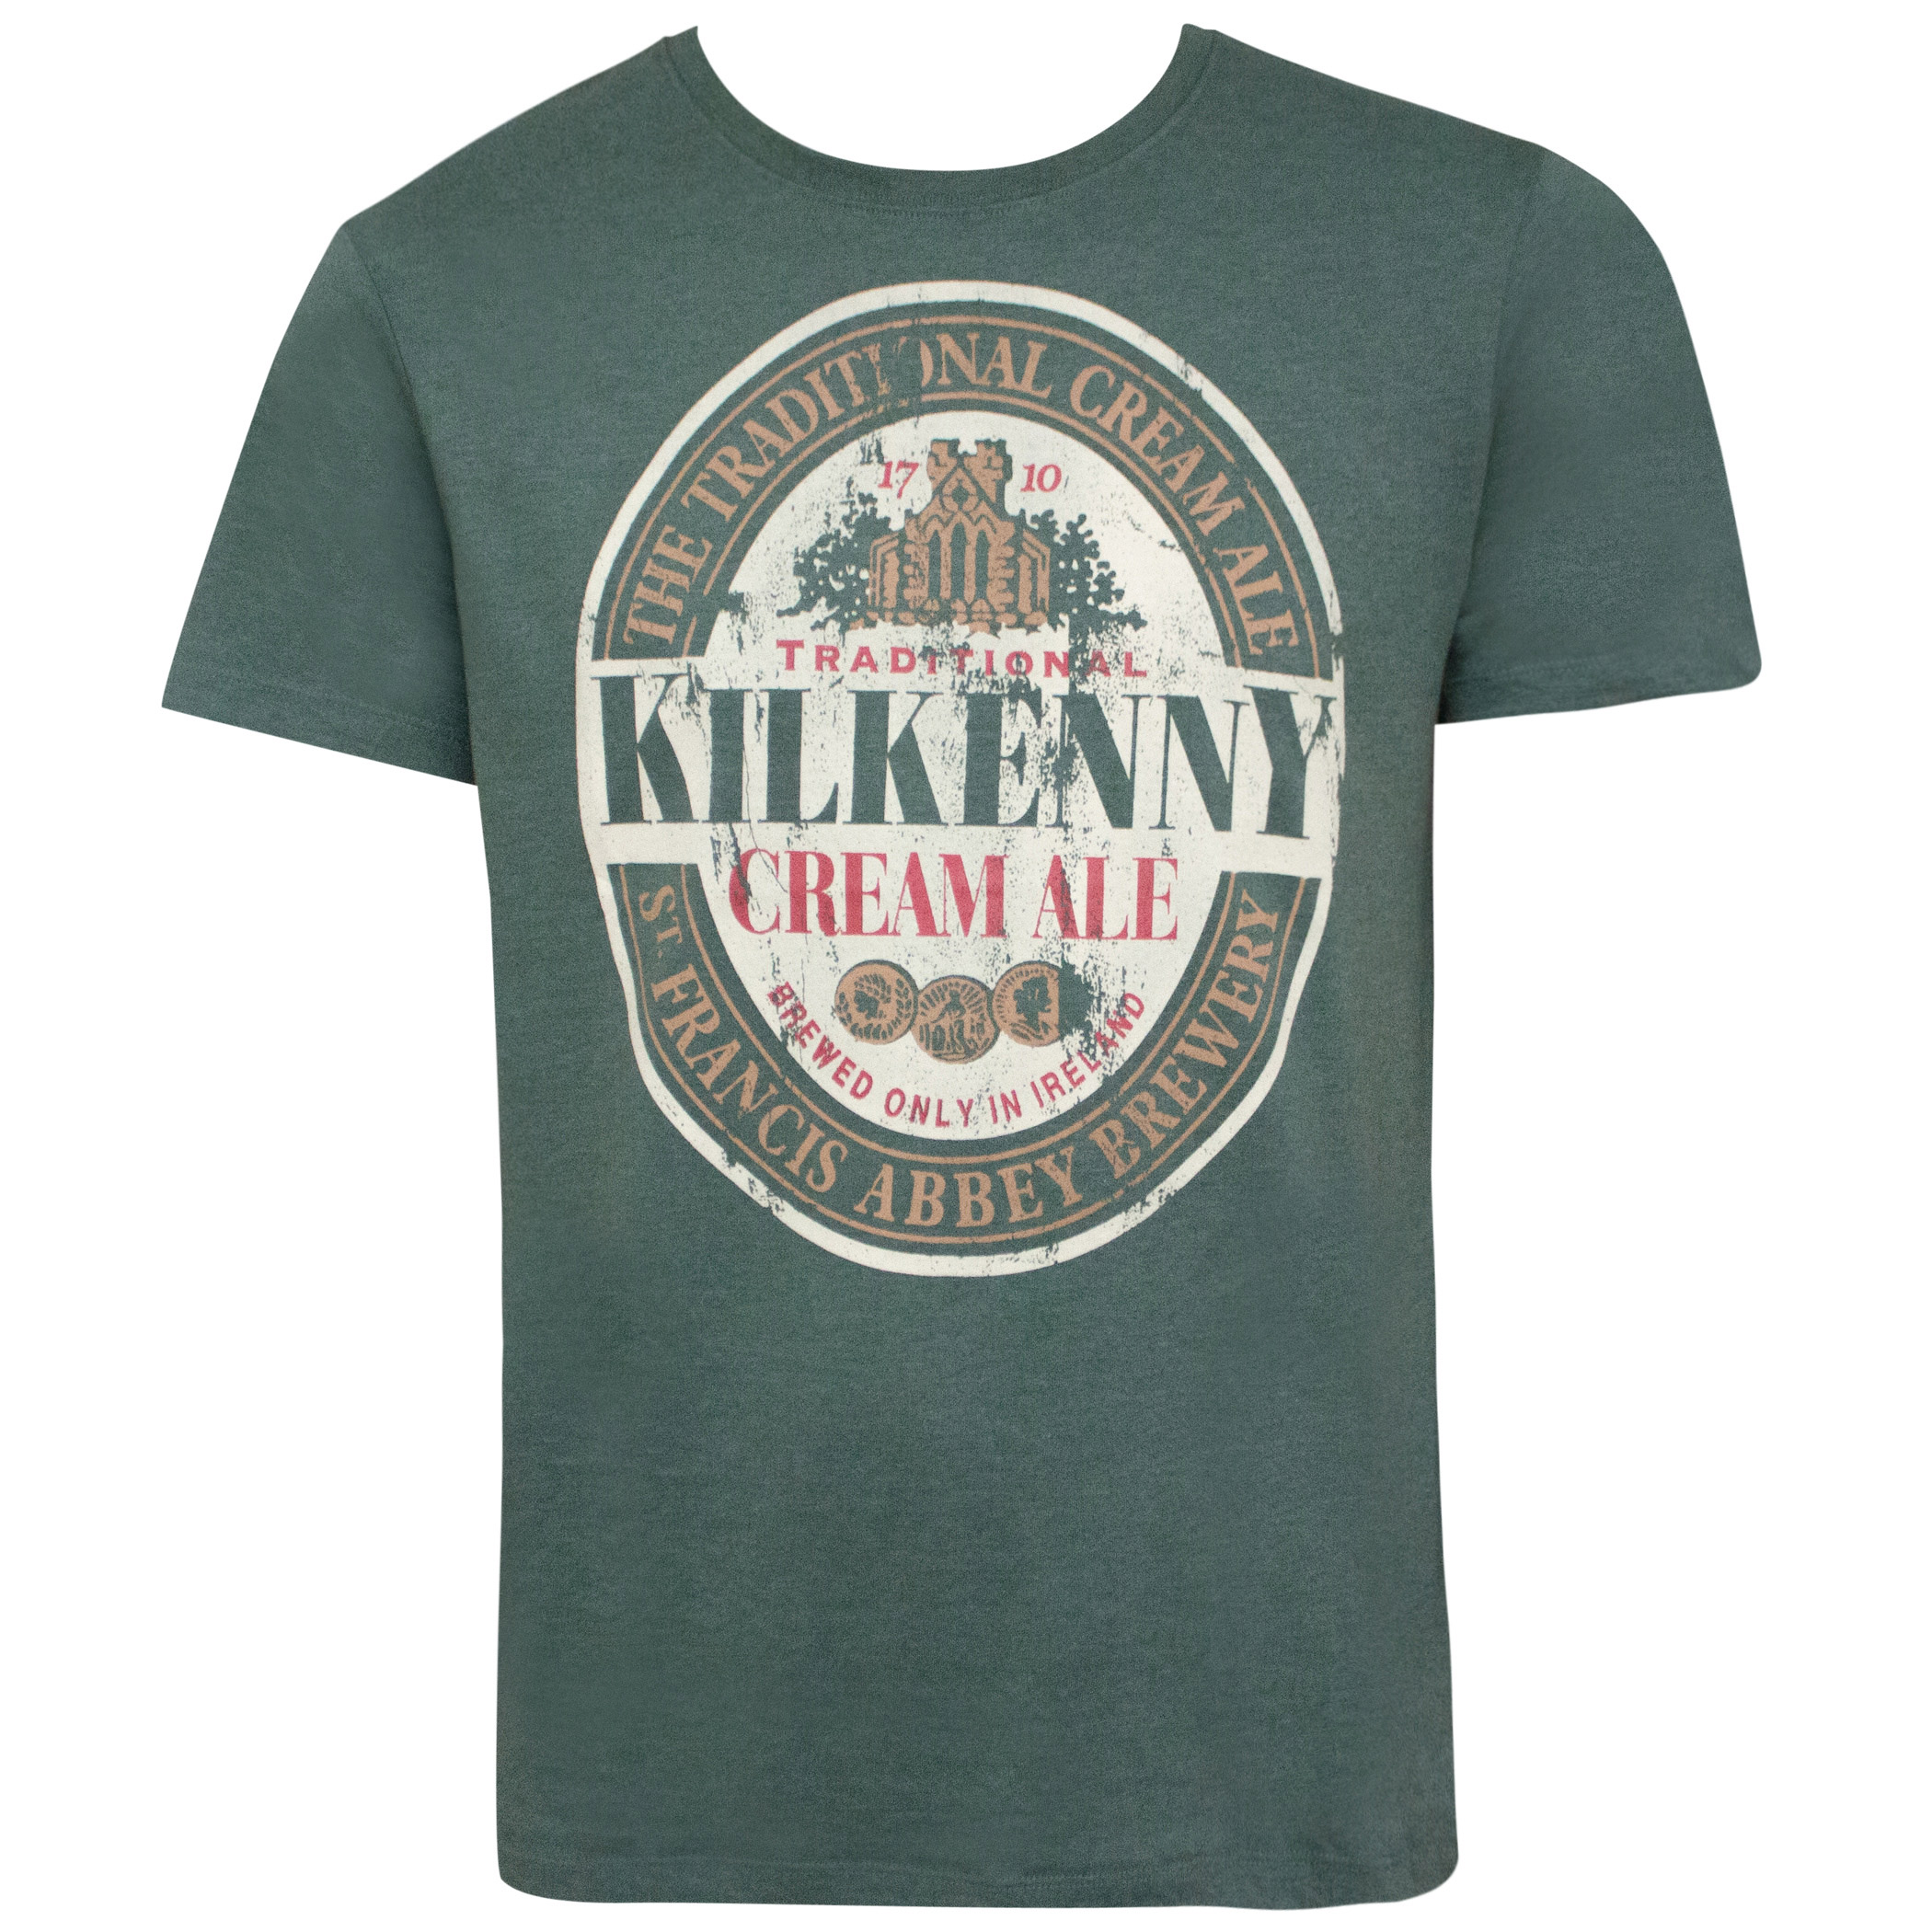 Kilkenny Irish Beer Men's Green Logo T-Shirt